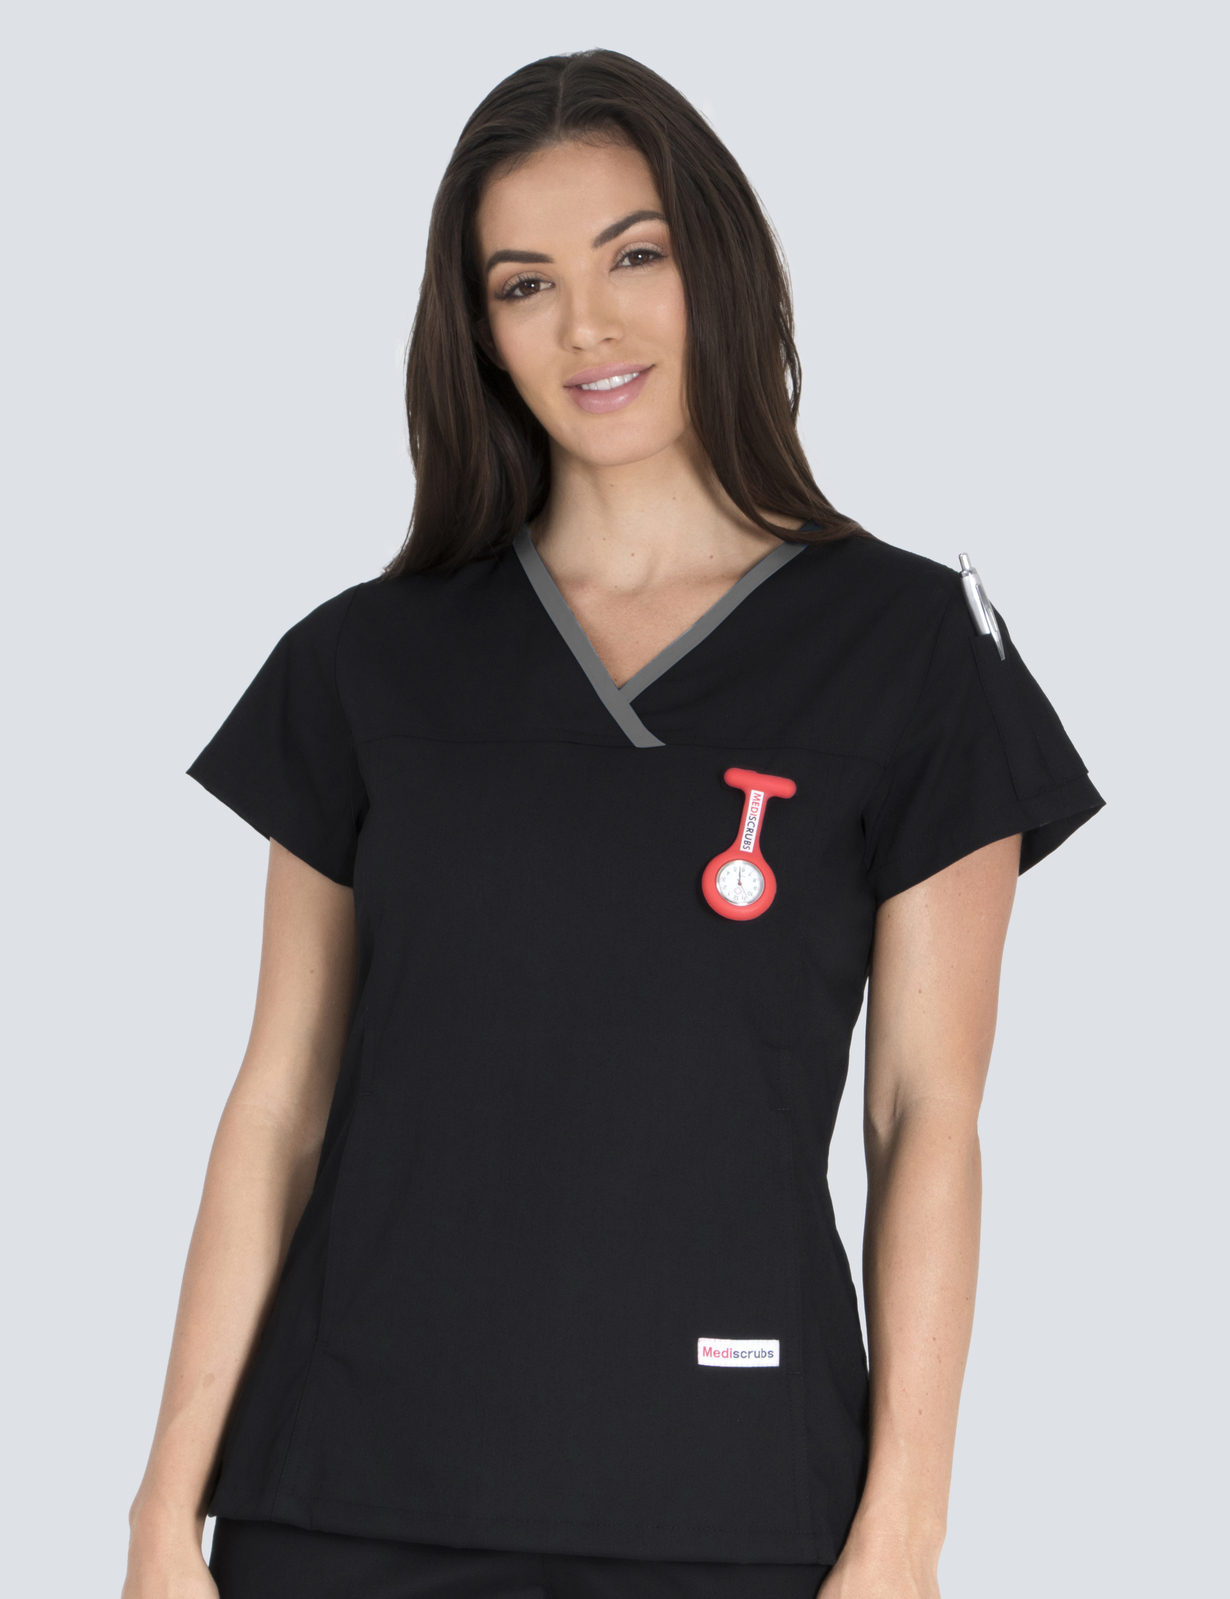 Launceston General Hospital - Medical Imaging- Sonographer- With Trim - Women's Fit X 3 Logos Bundle